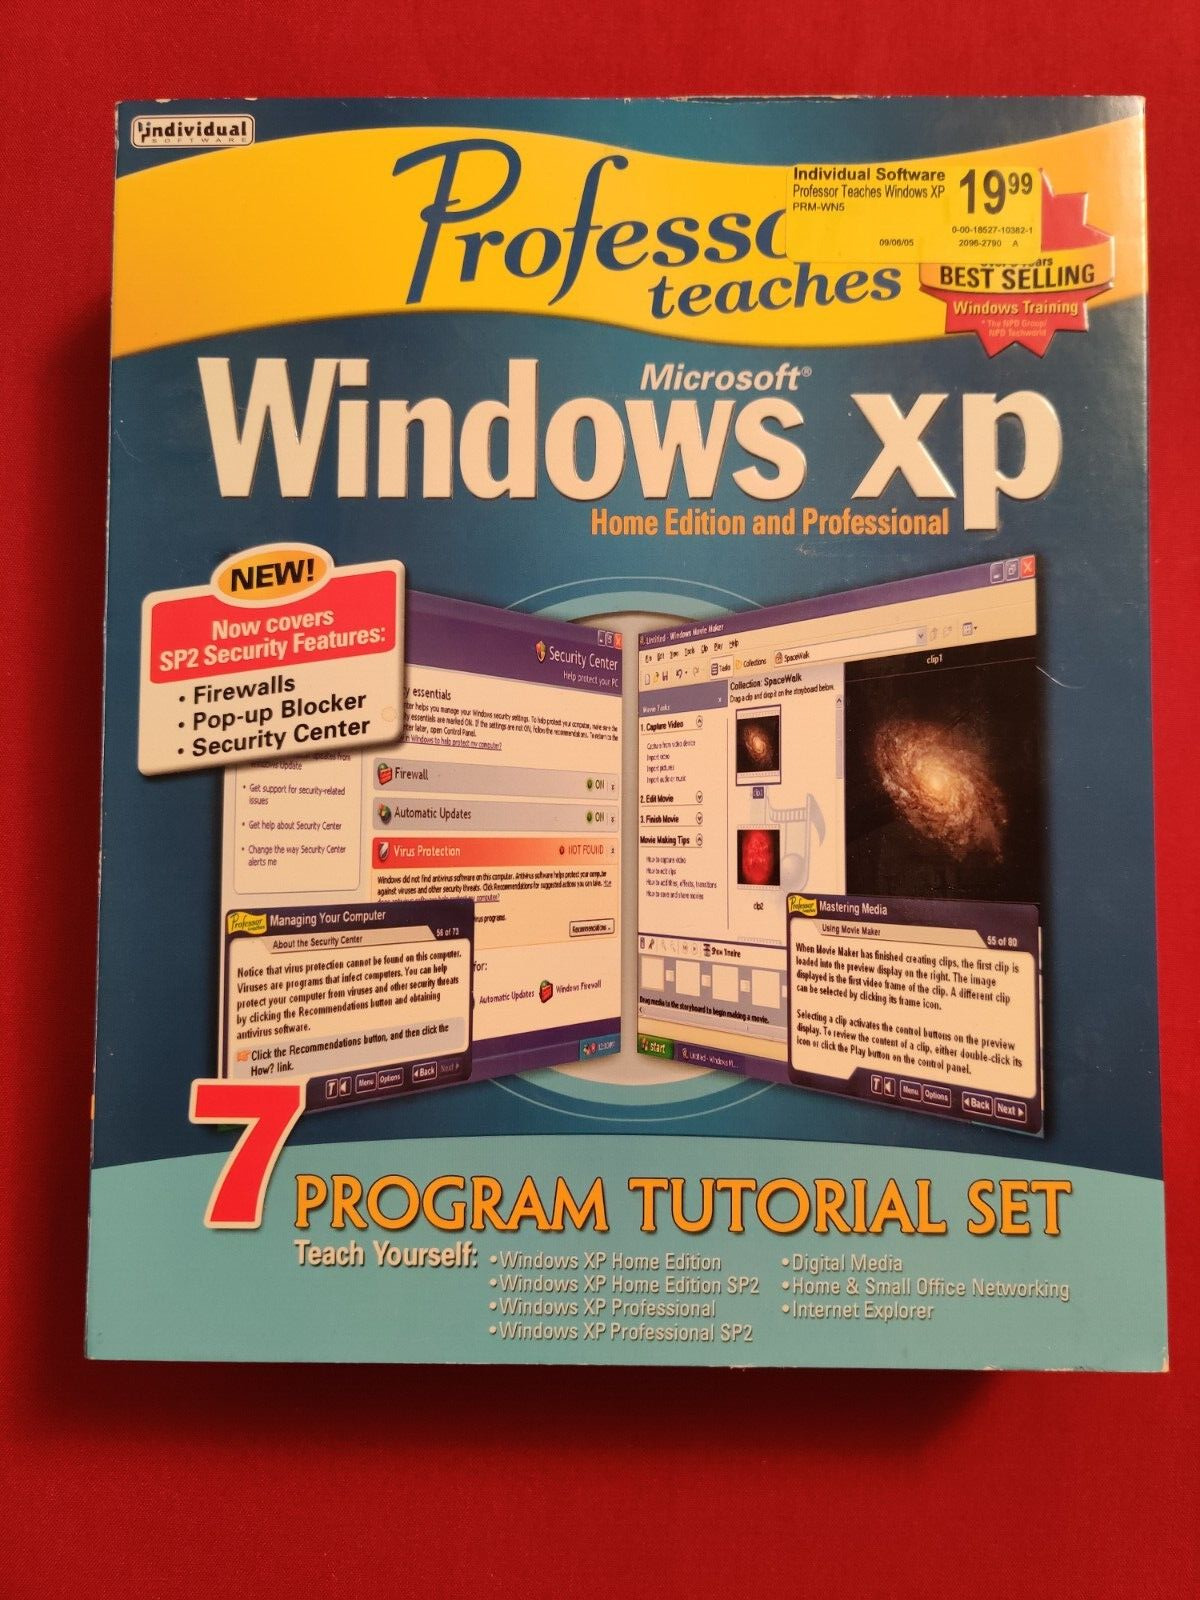 “Professor Teaches” Microsoft Office XP 7 Program Interactive Tutorial Set-NEW